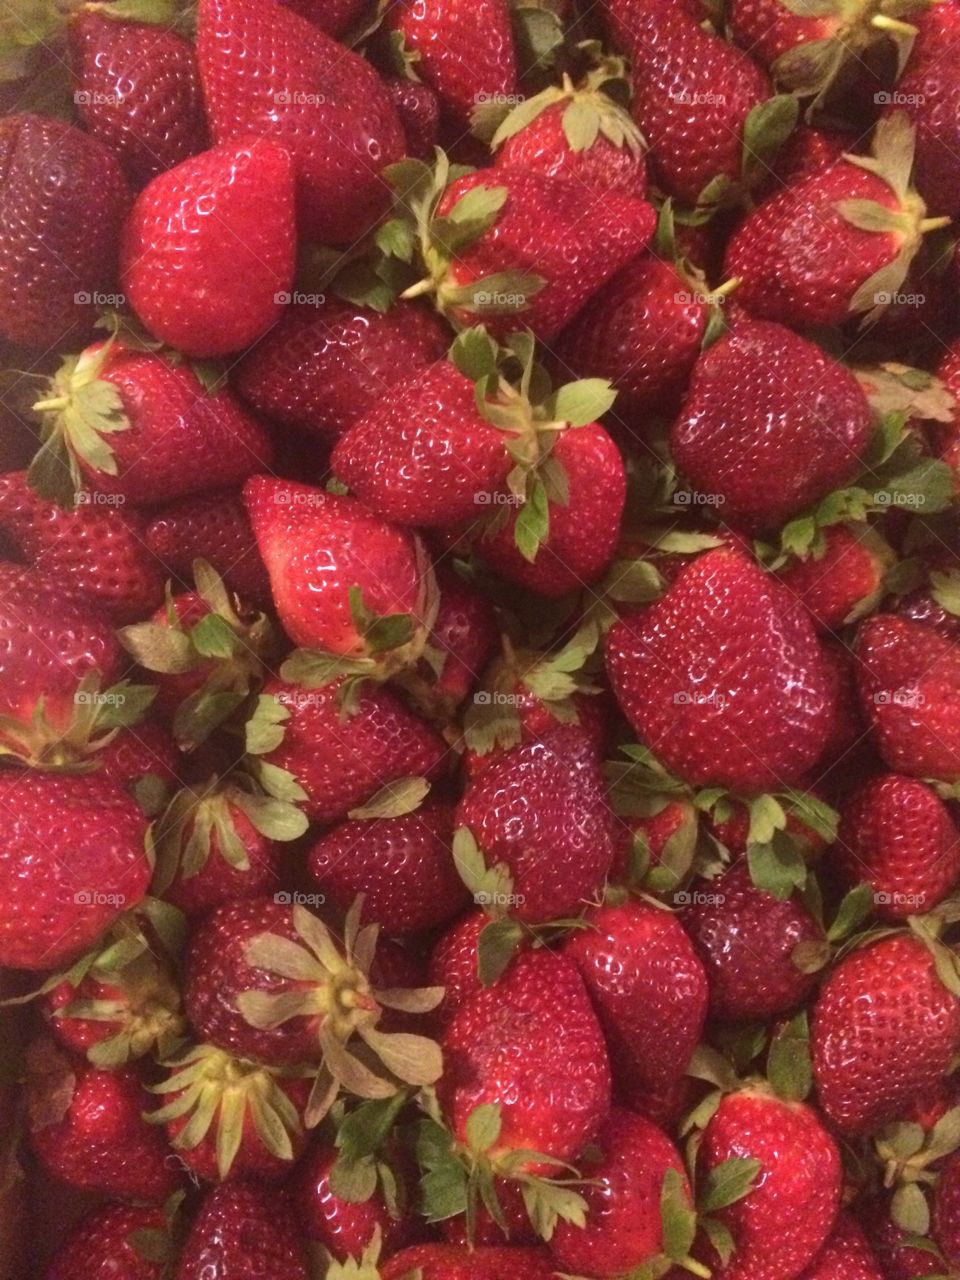 Strawberry harvest